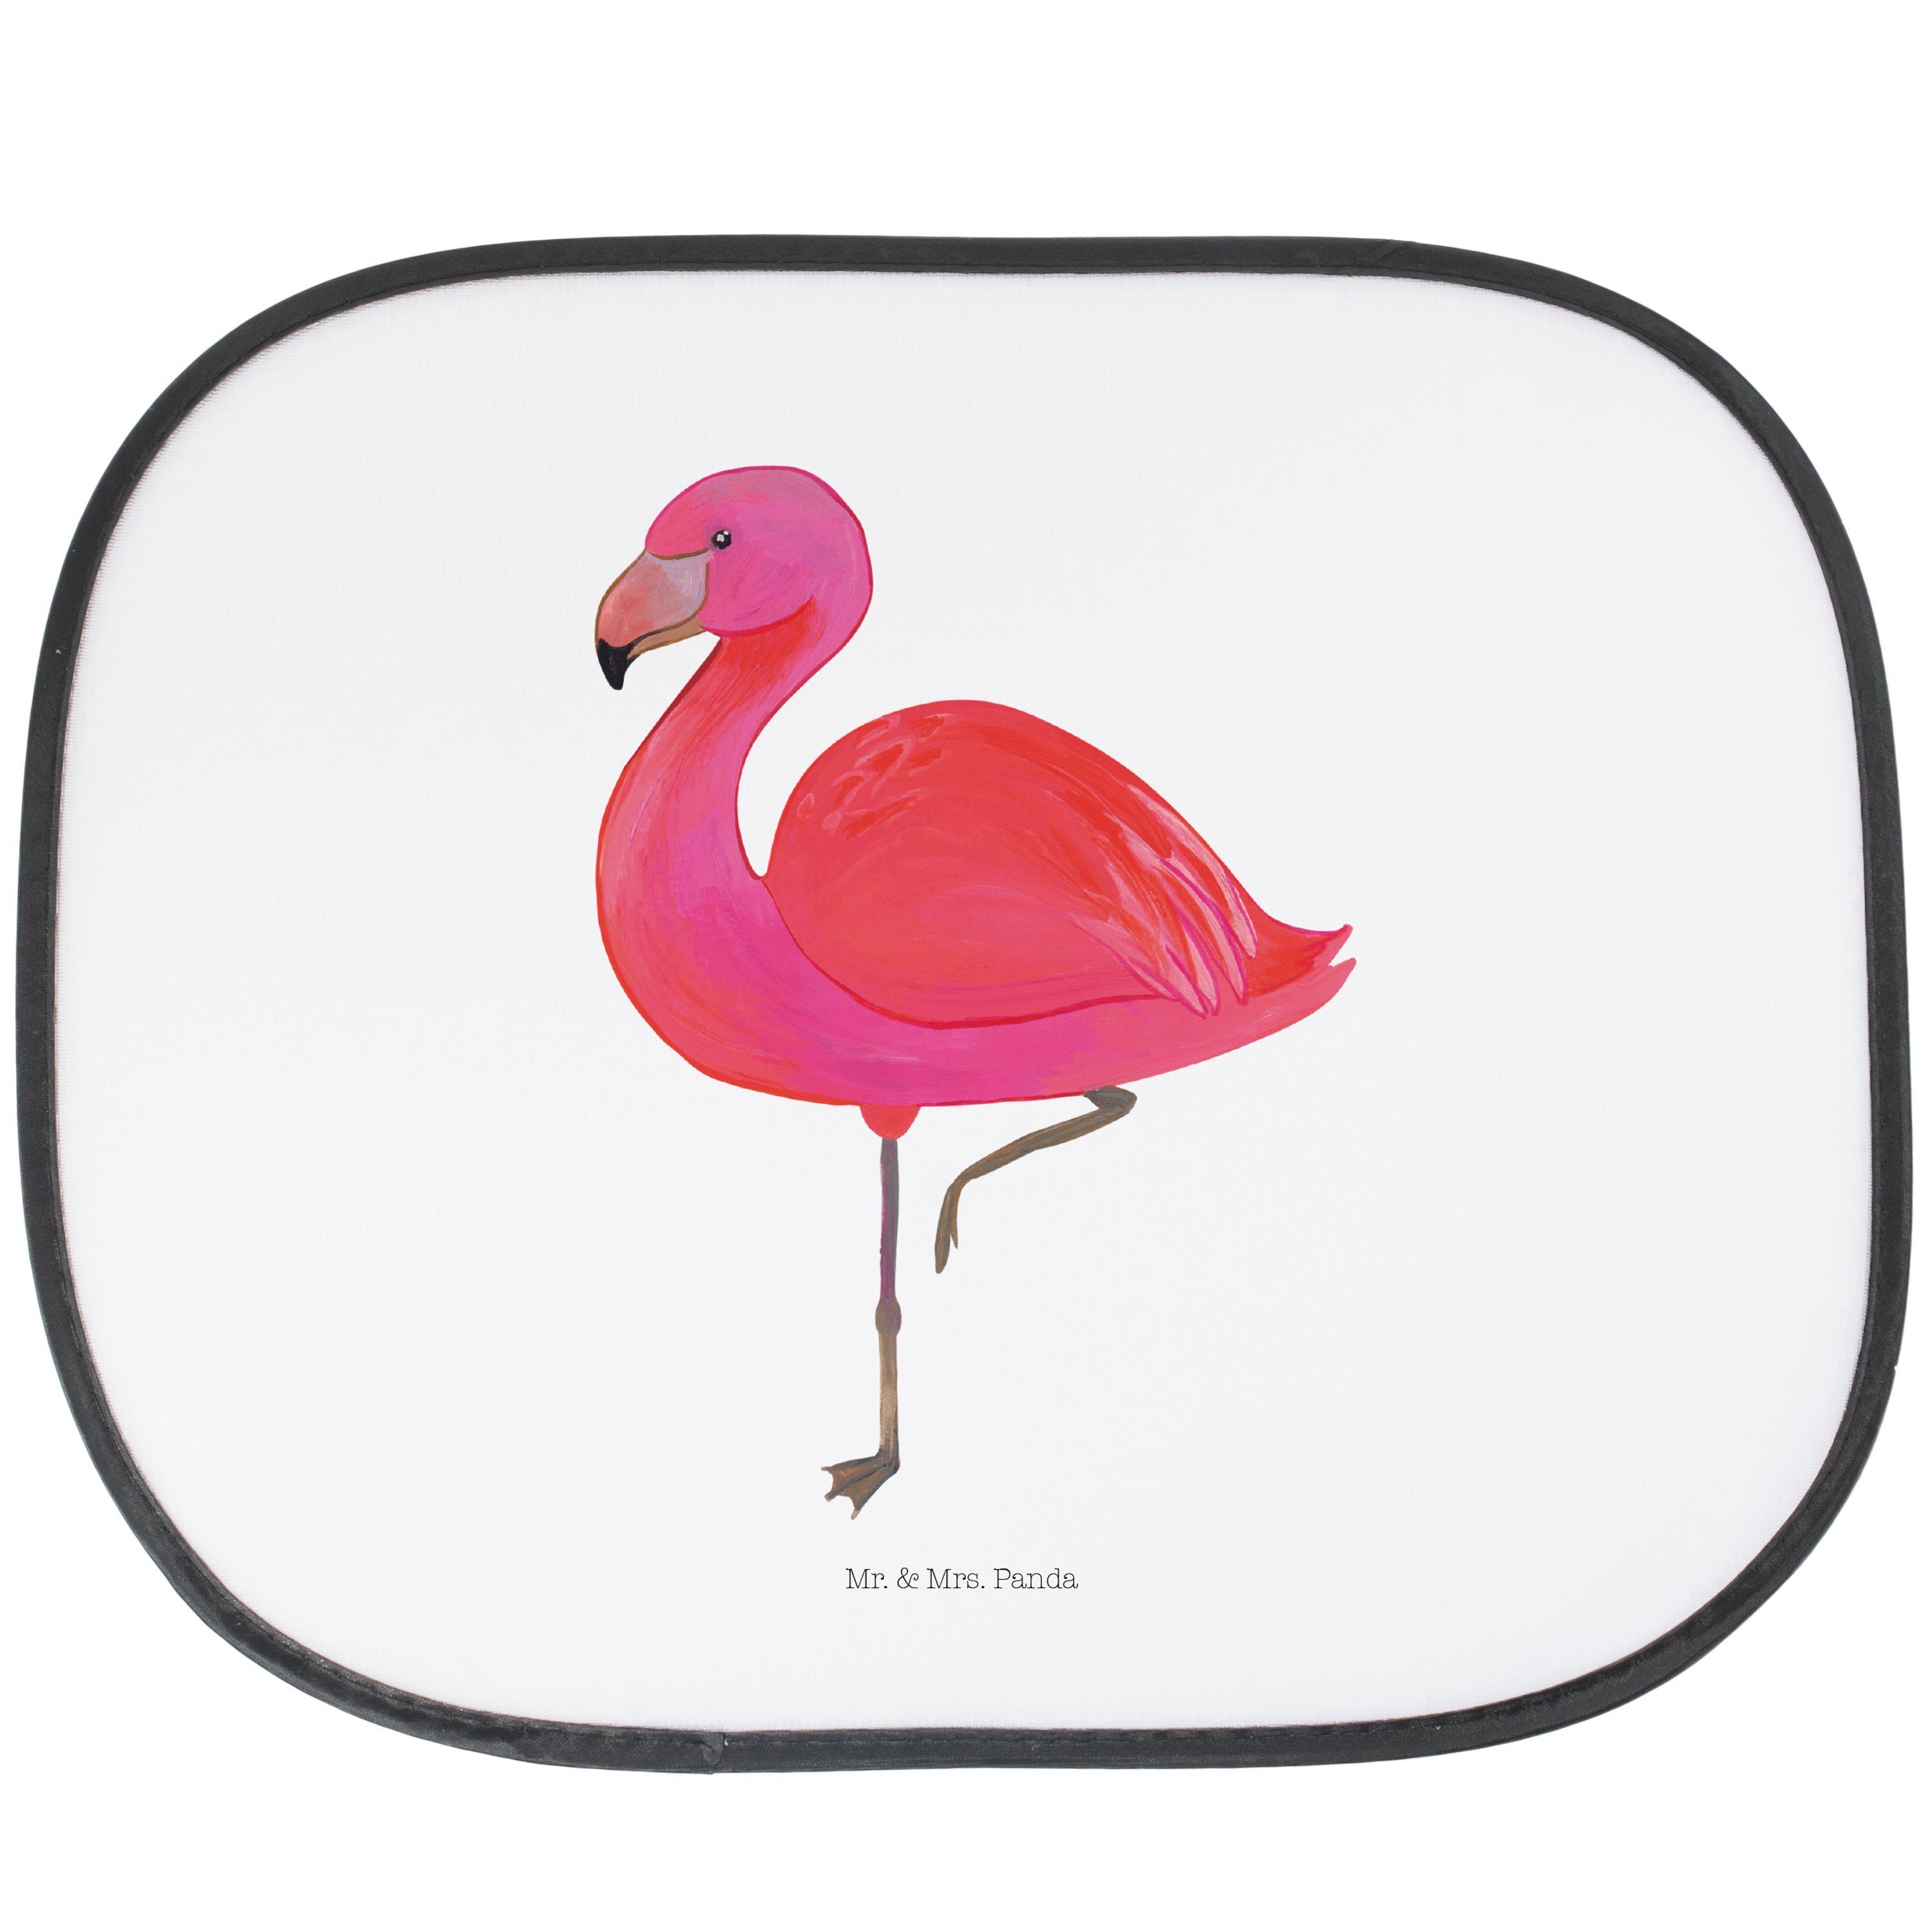 Sonnenschutz Flamingo classic - Weiß - Geschenk, Sonnenblende, Sonnenschutz Kinder, Mr. & Mrs. Panda, Seidenmatt